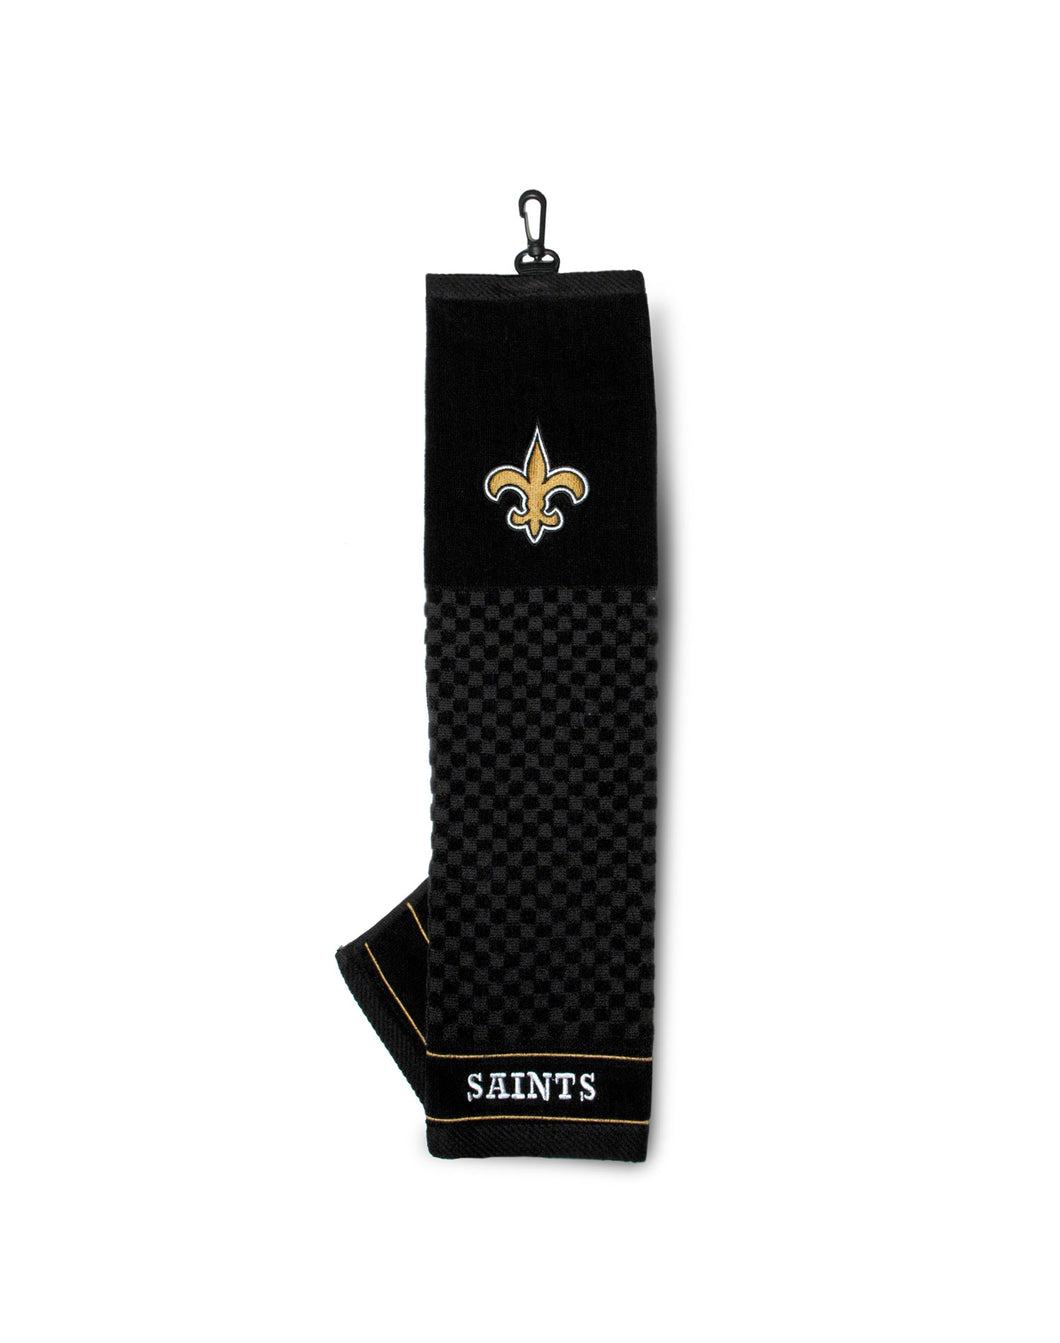 NFL Official Team Crested Tri Fold Golf Towel. New Orleans Saints.